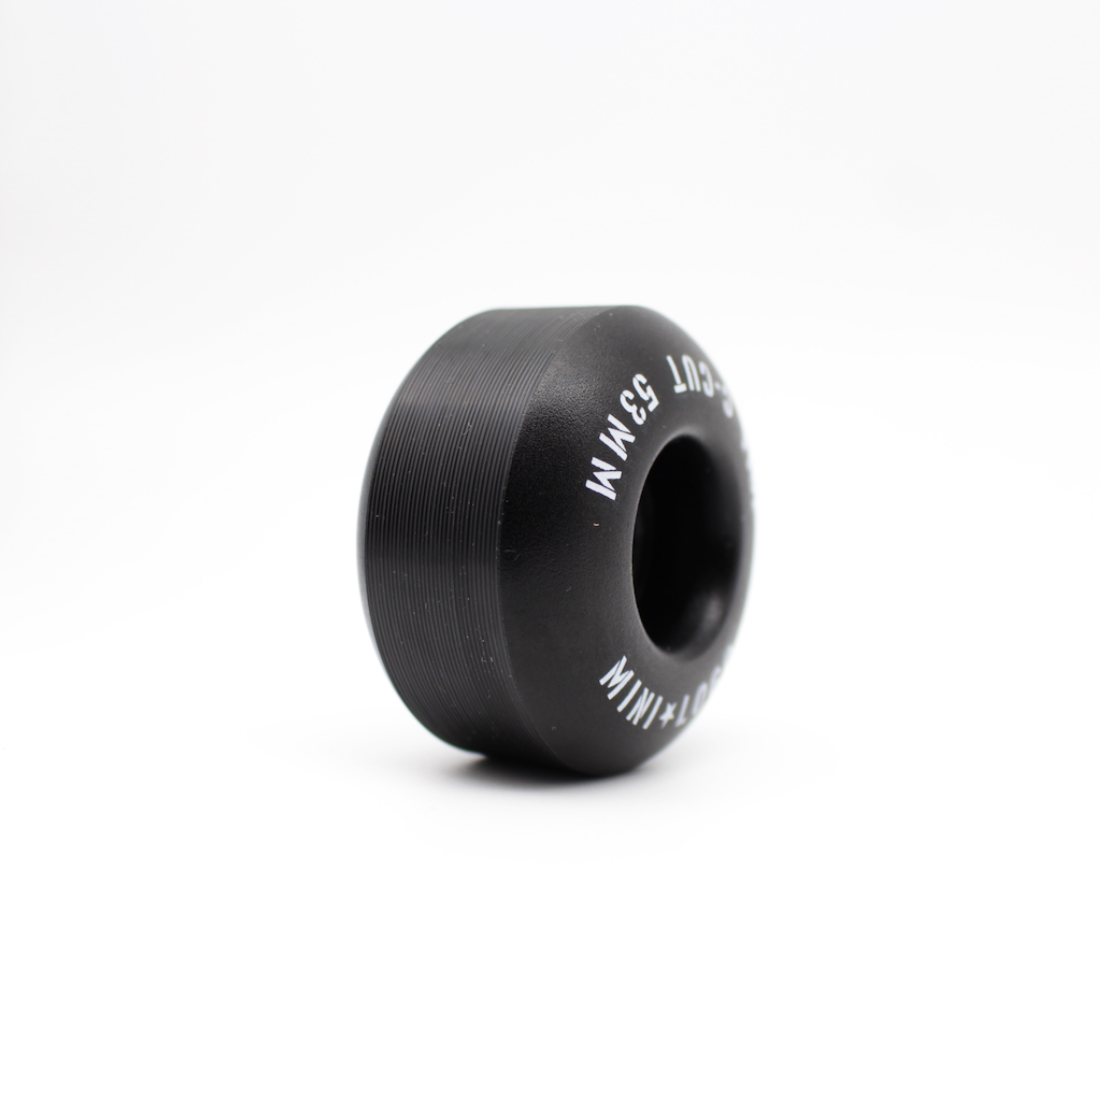 【MINI-LOGO】Wheel "Black" - 53mm